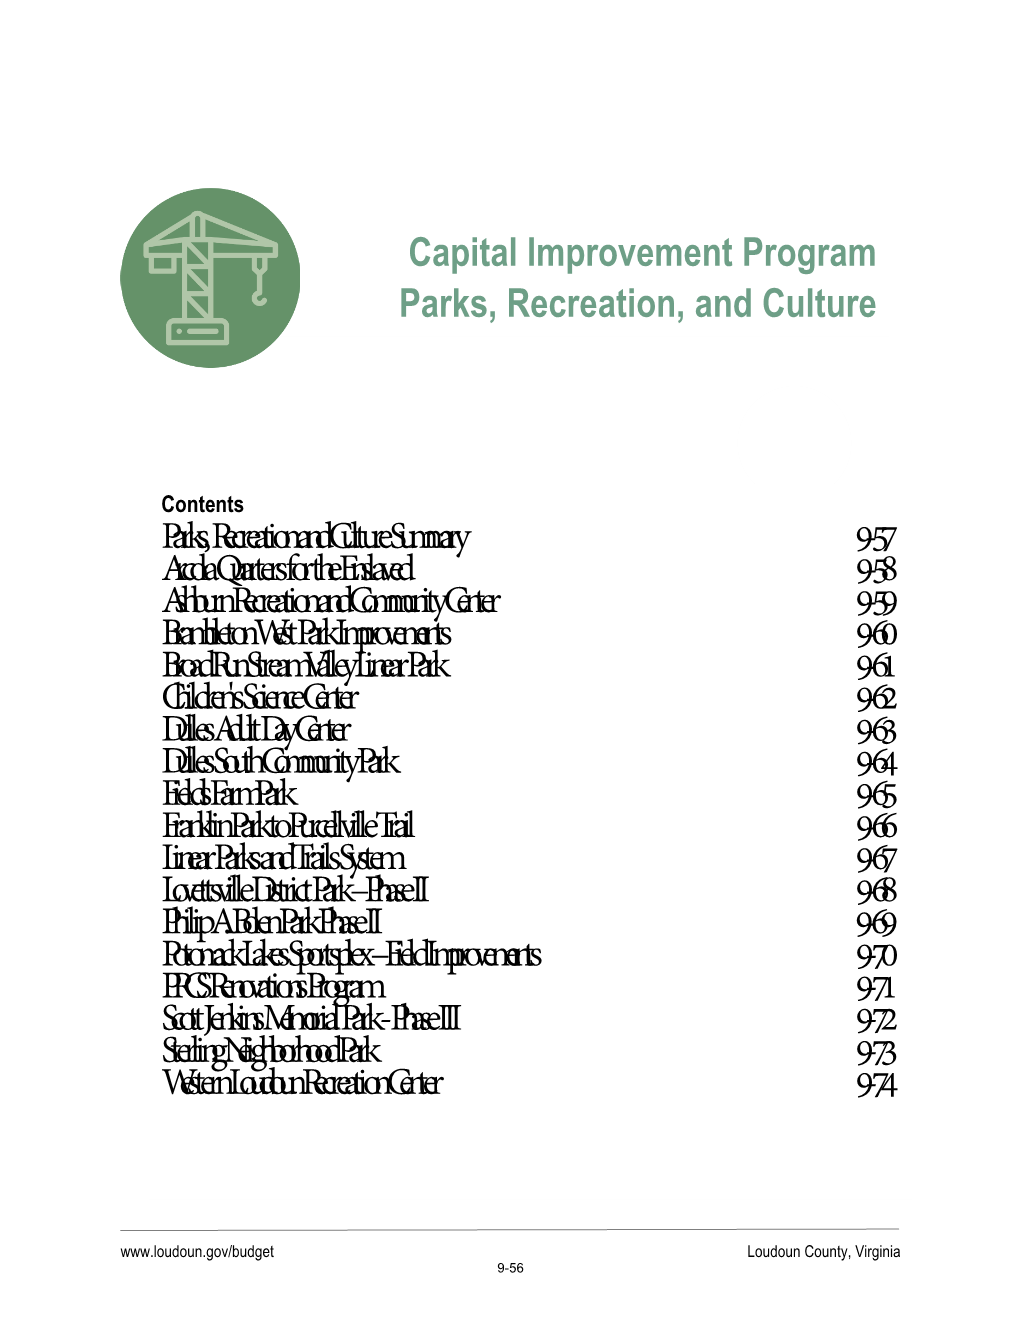 Capital Improvement Program Parks, Recreation, and Culture